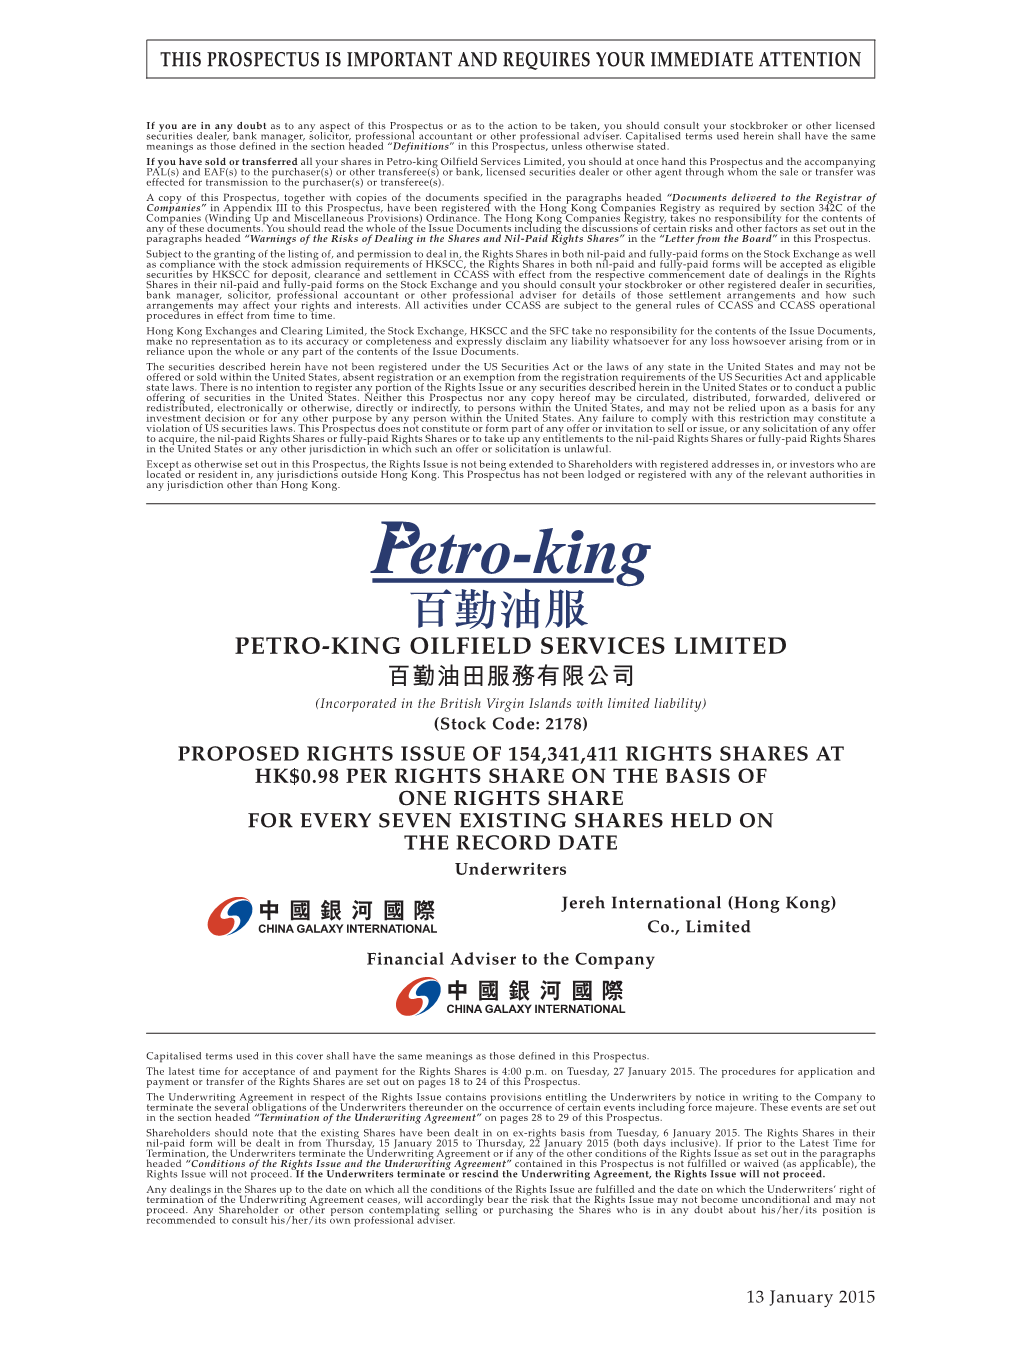 Petro-King Oilfield Services Limited 百勤油田服務有限公司